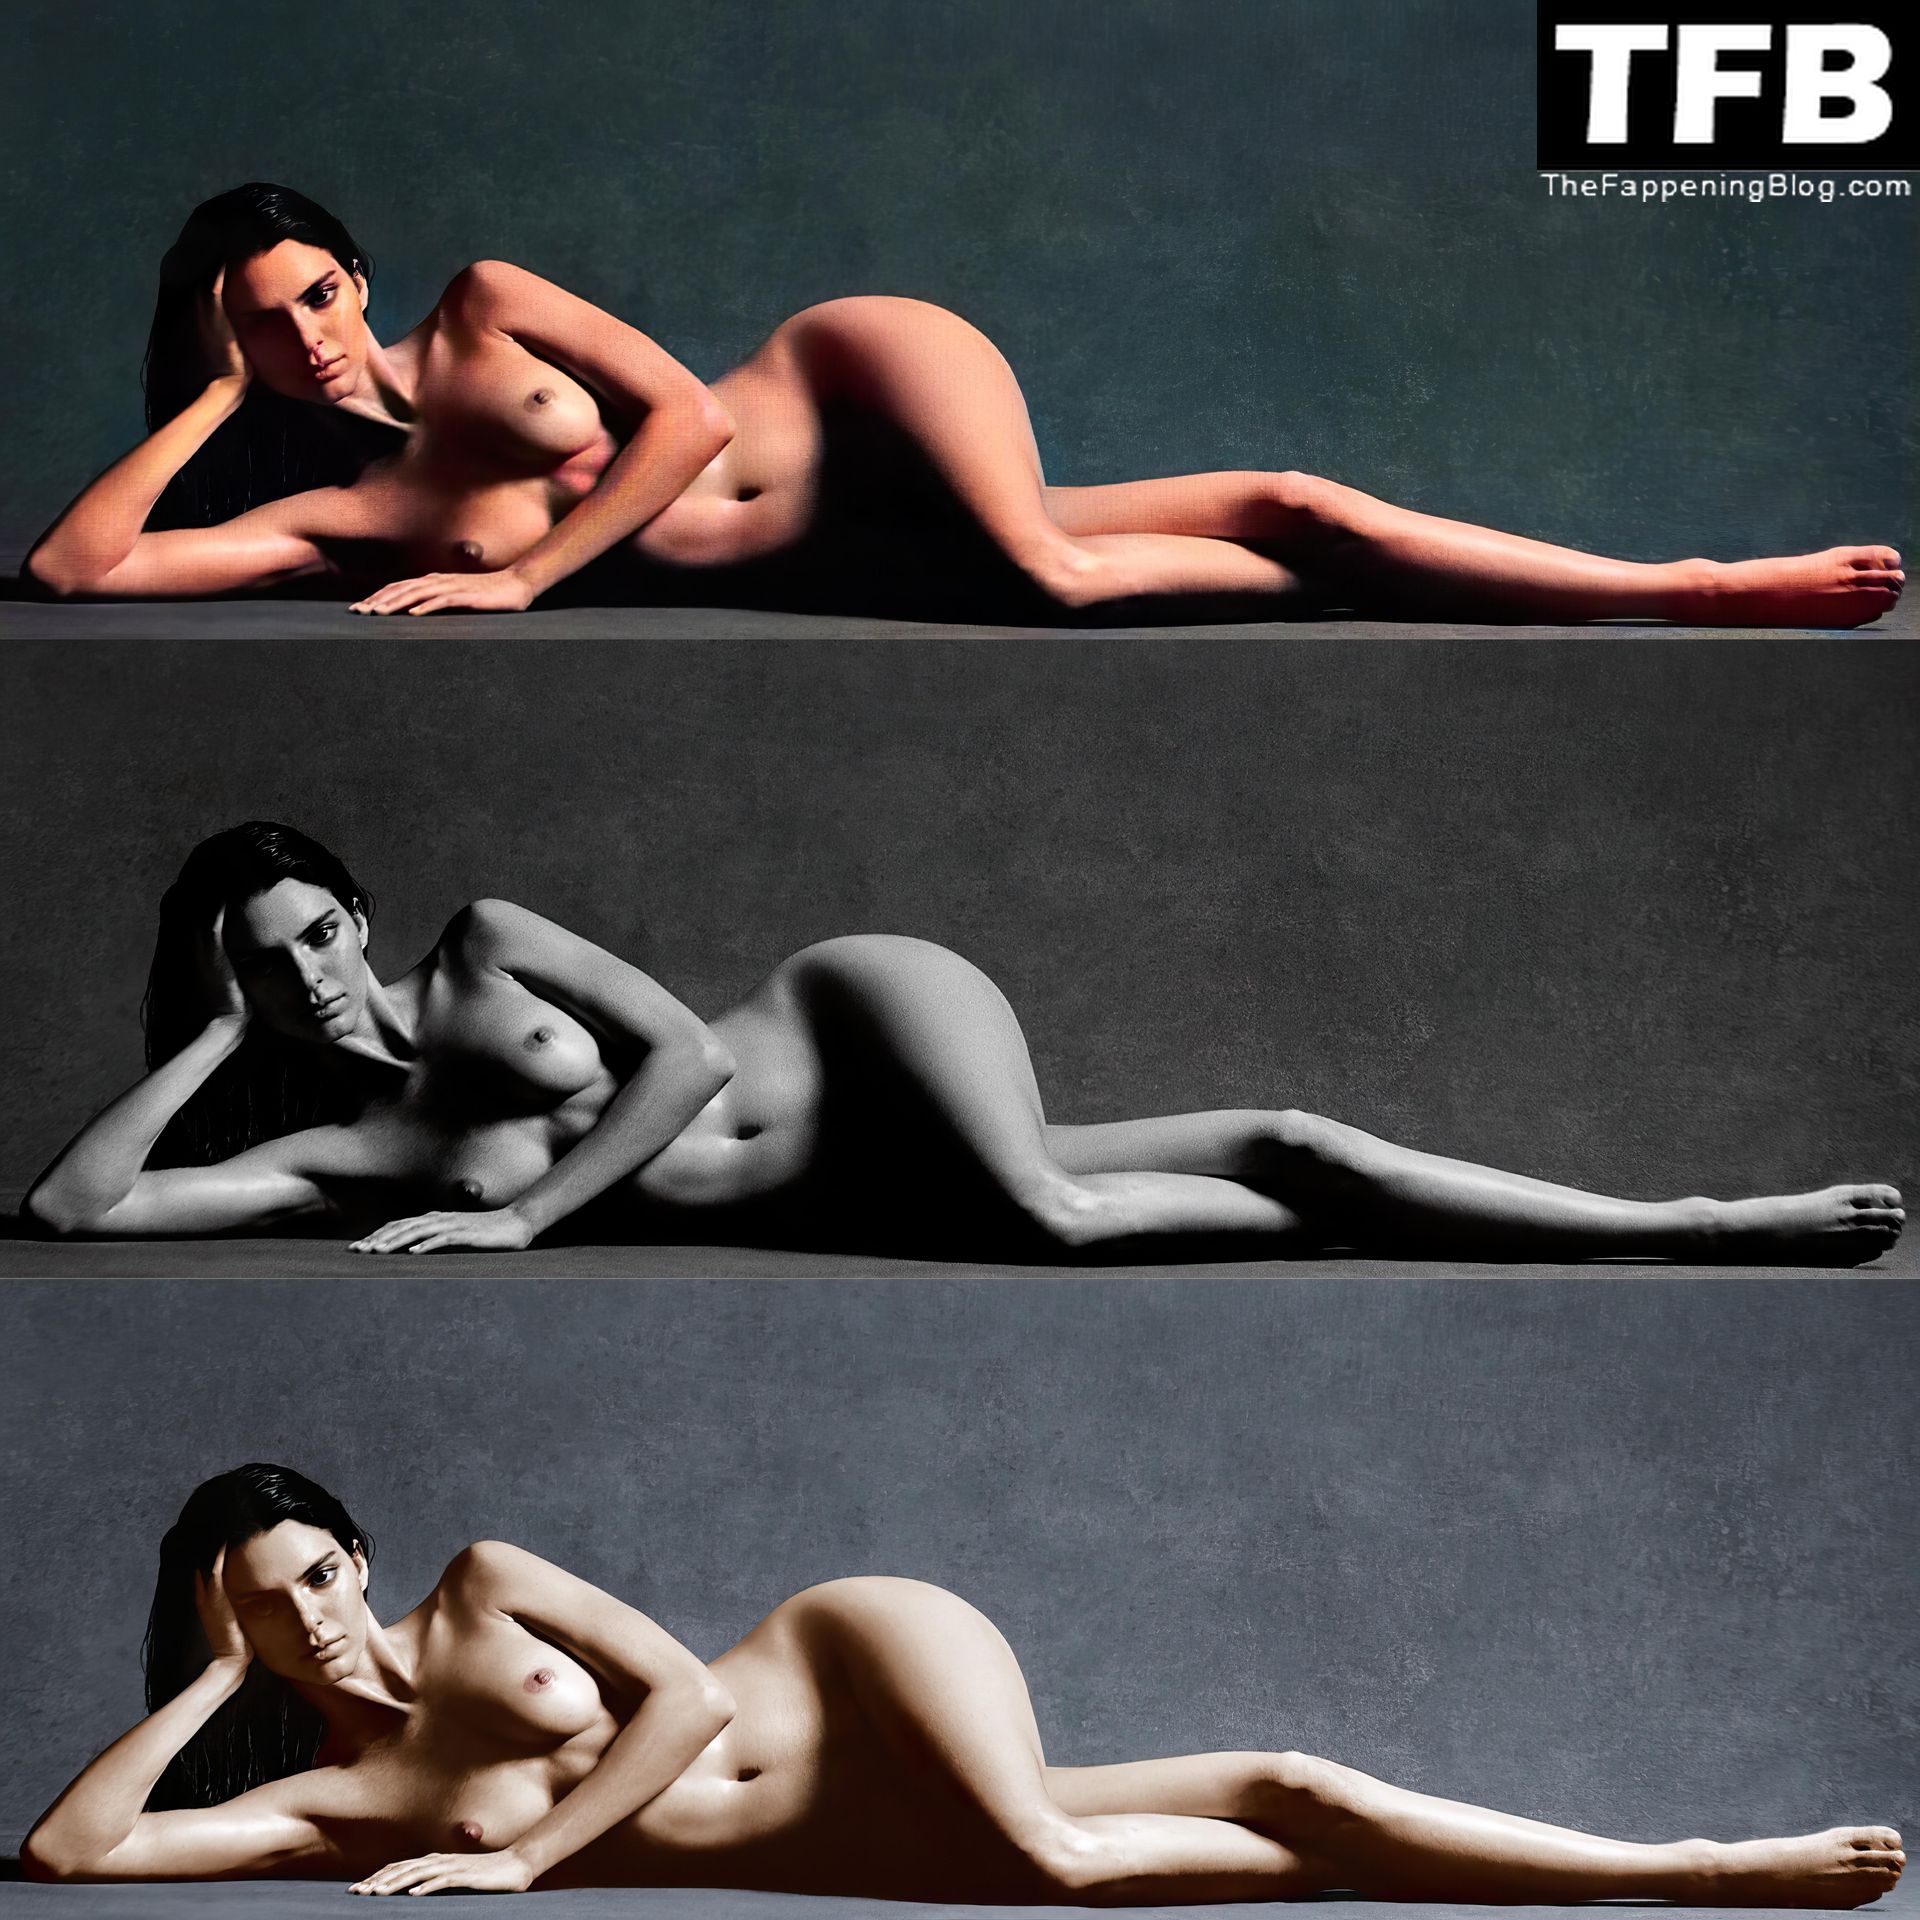 Kendall Jenner Nude Leak